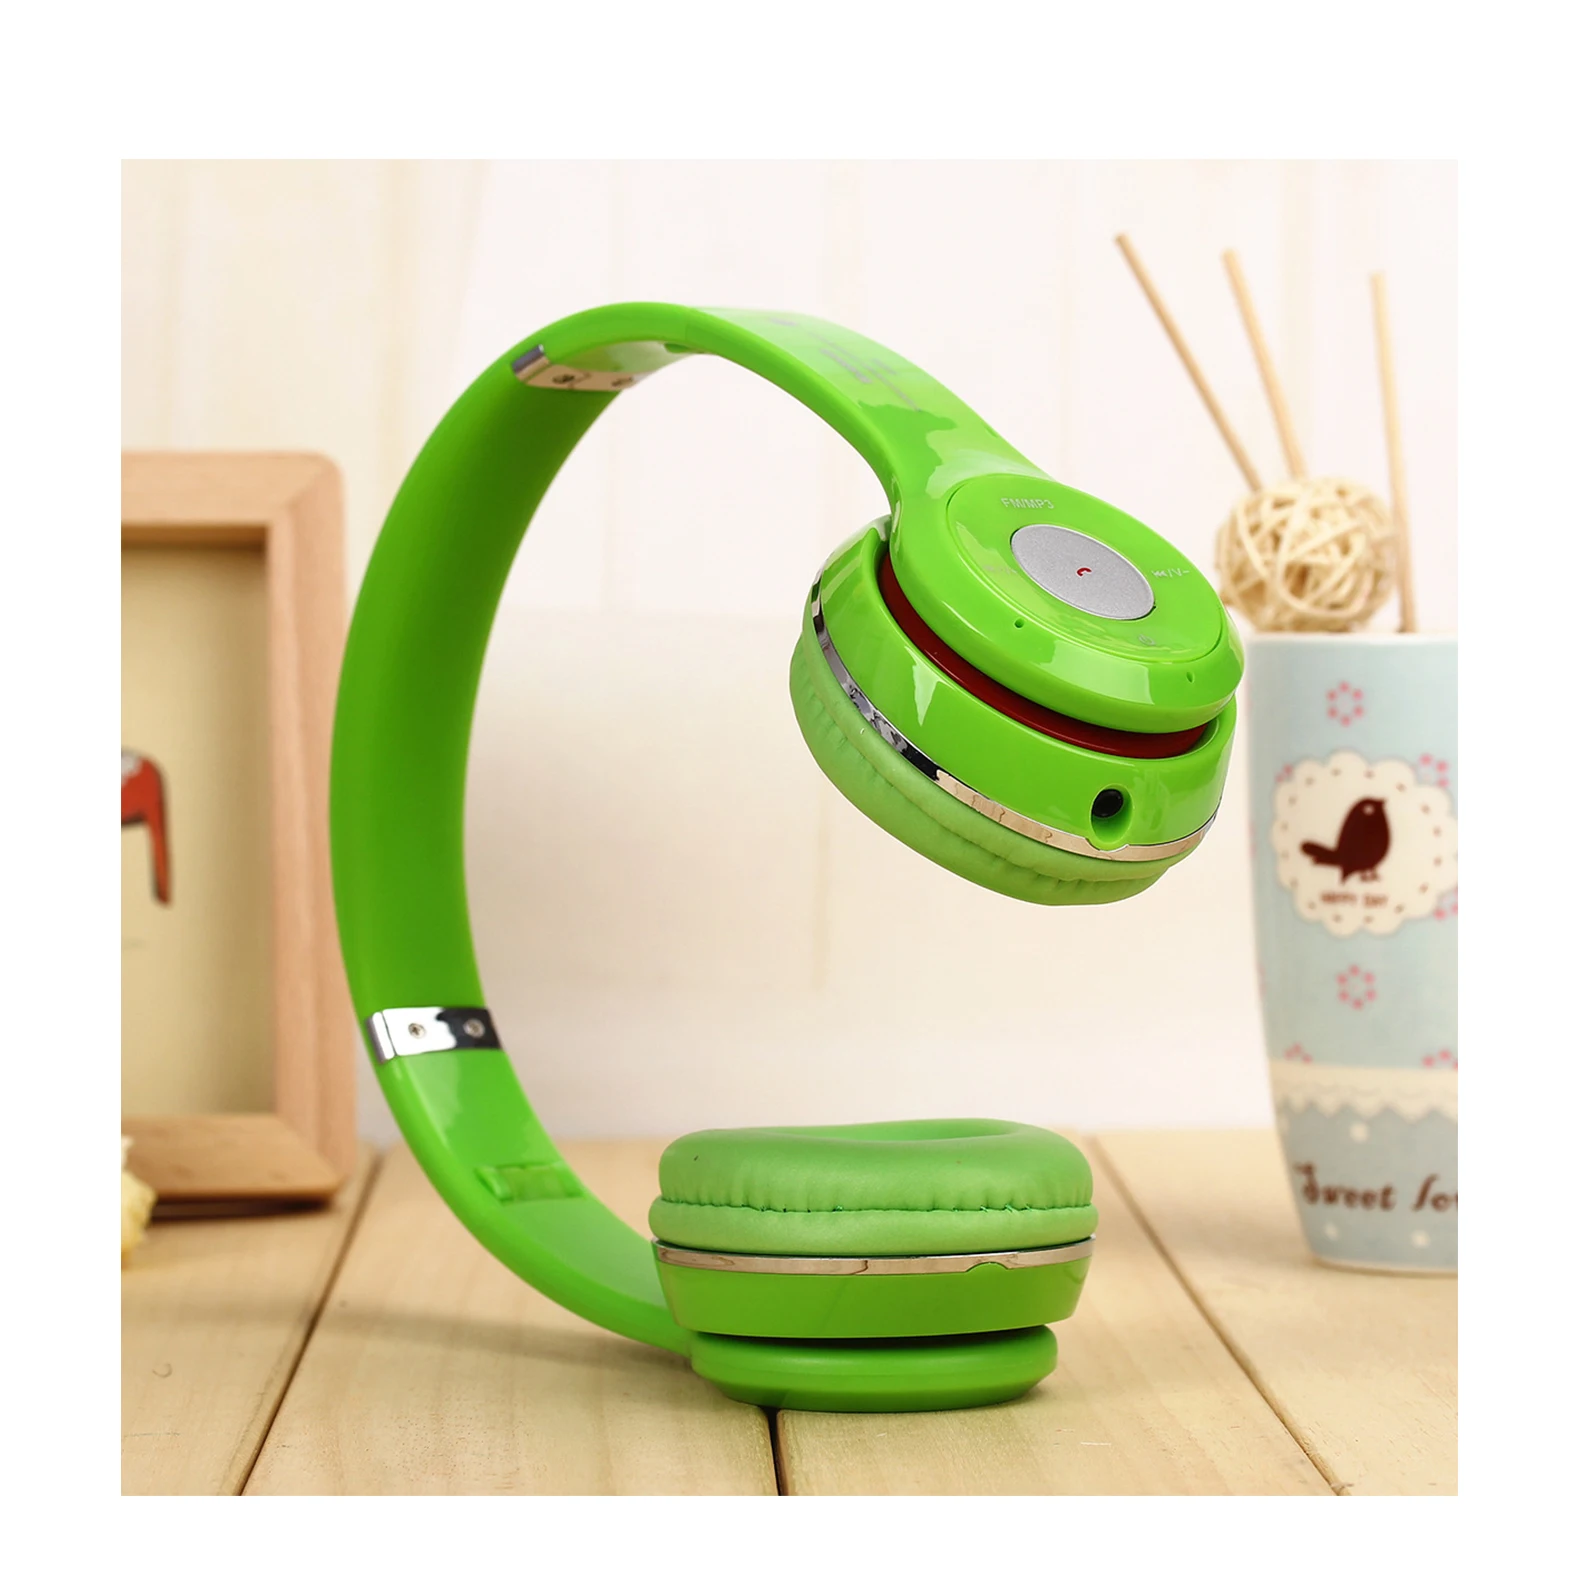 

FB-S460 ANC noise cancelling video songs SHM7110U gamming headset earphone earbuds wireless headphones